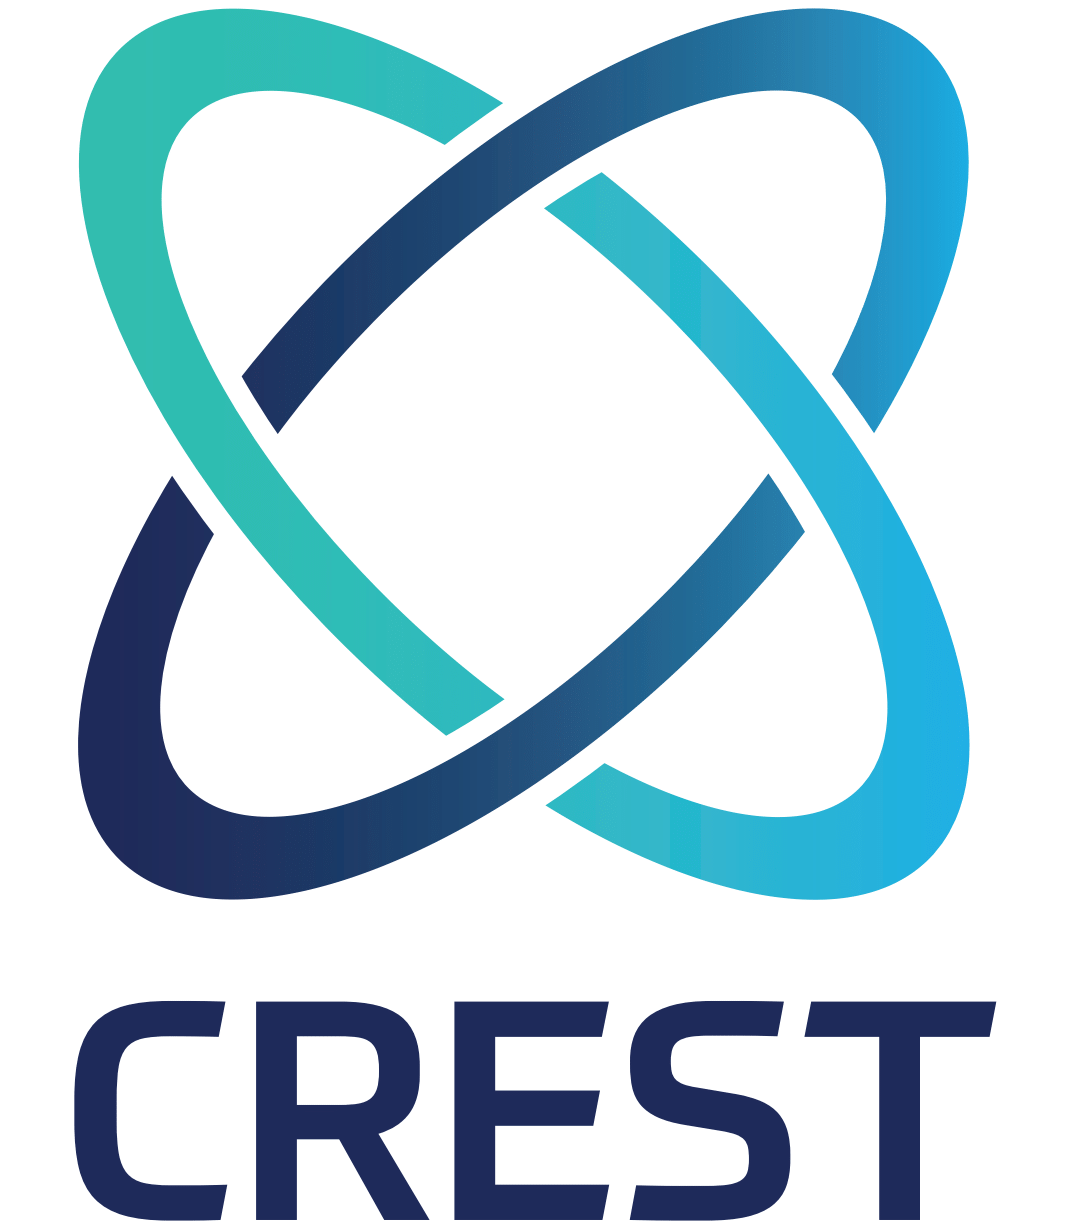 Crest logo 2022